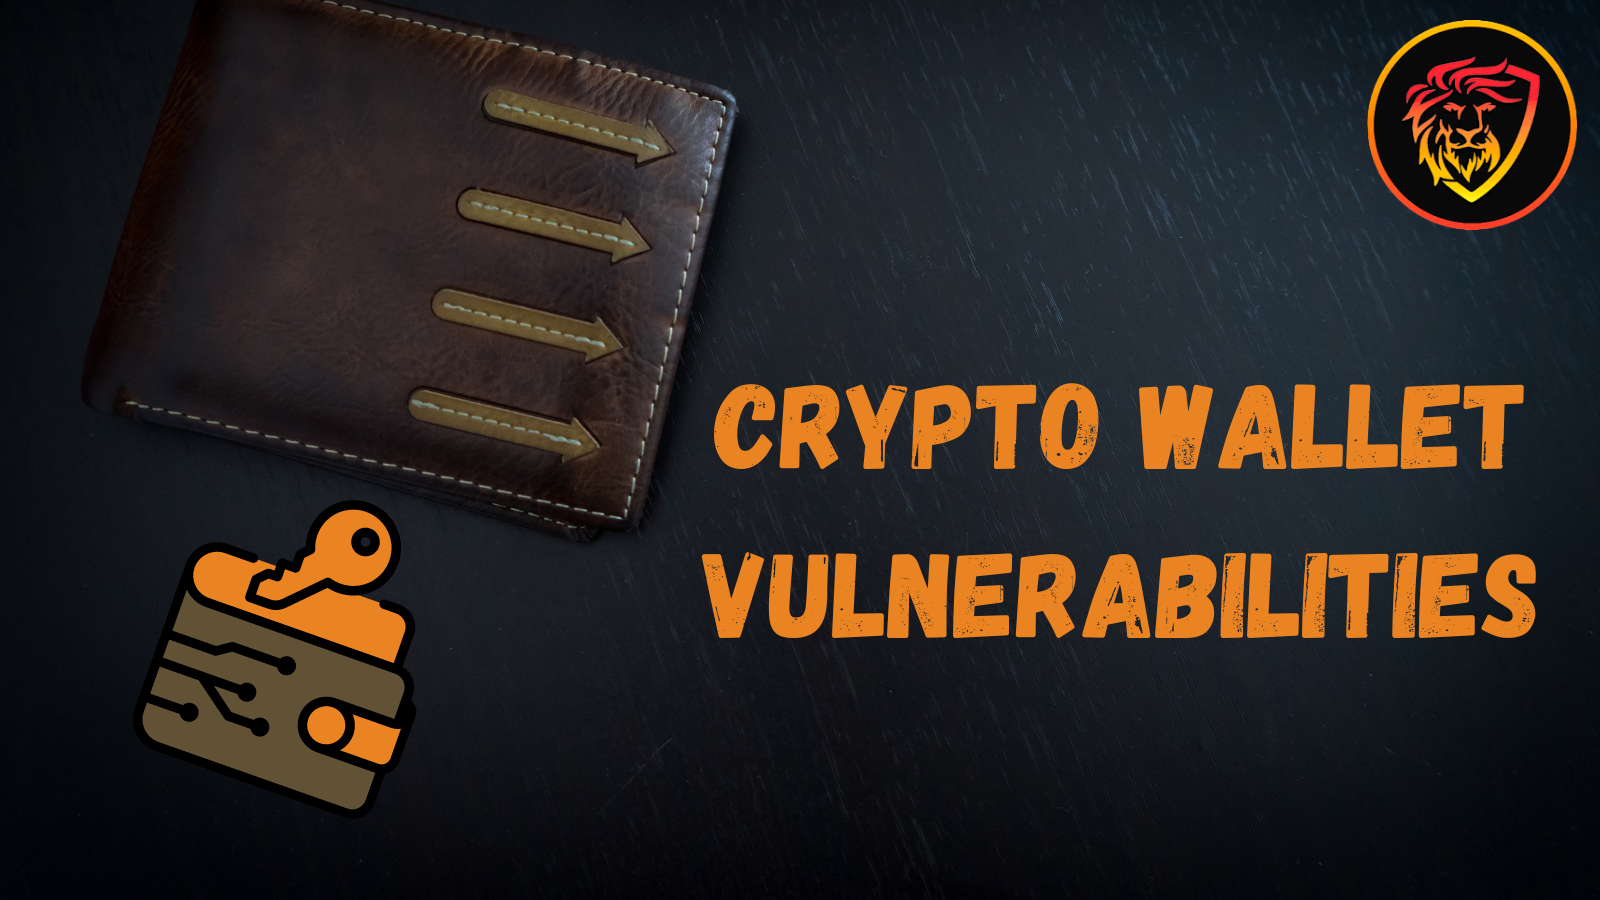 crypto wallet vulnerabilities leeo.png